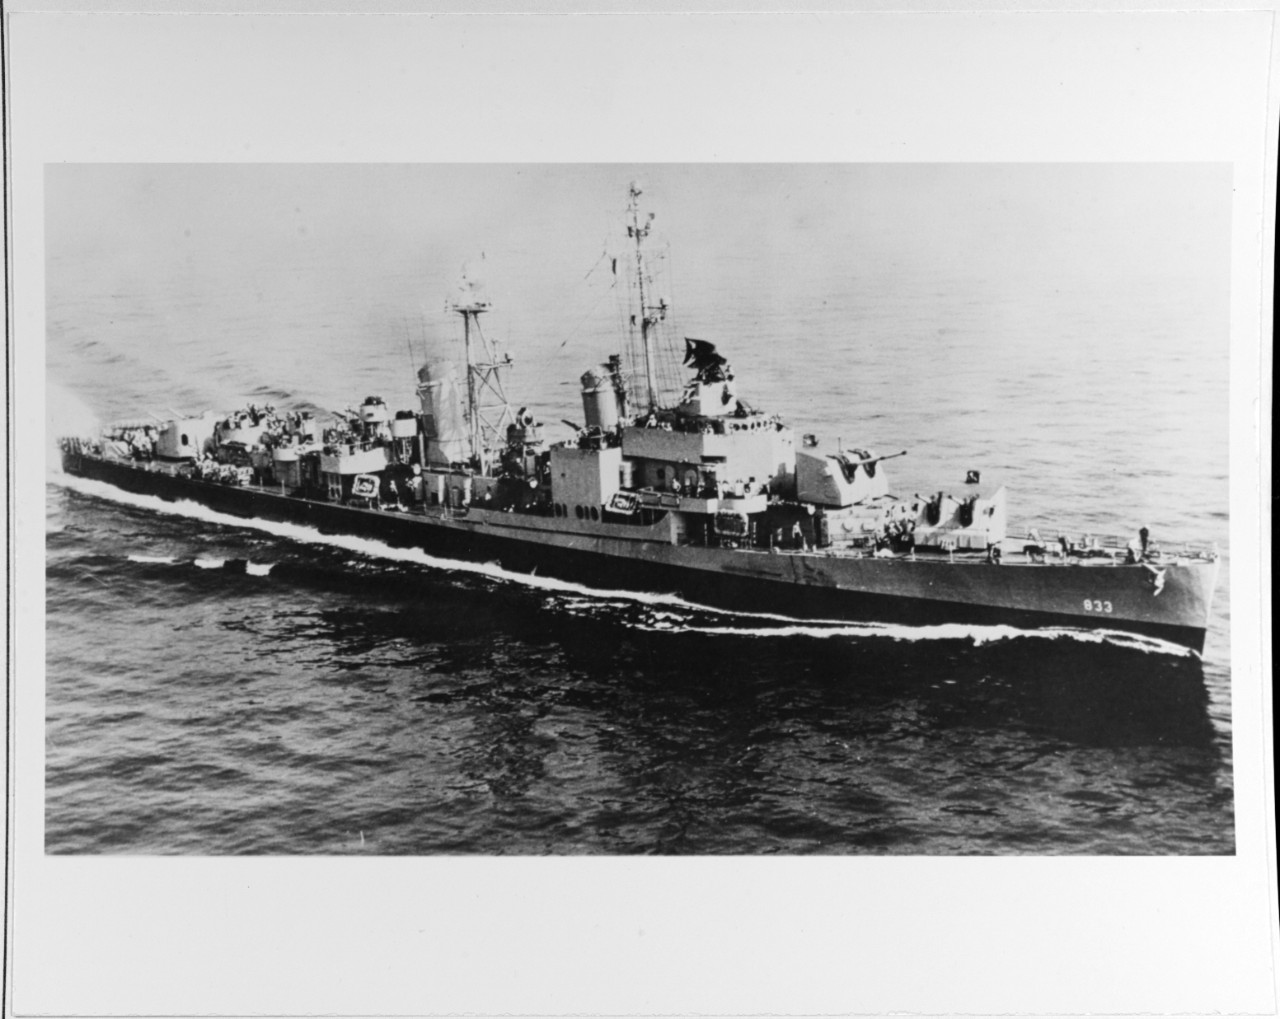 USS HERBERT J. THOMAS (DD-833)